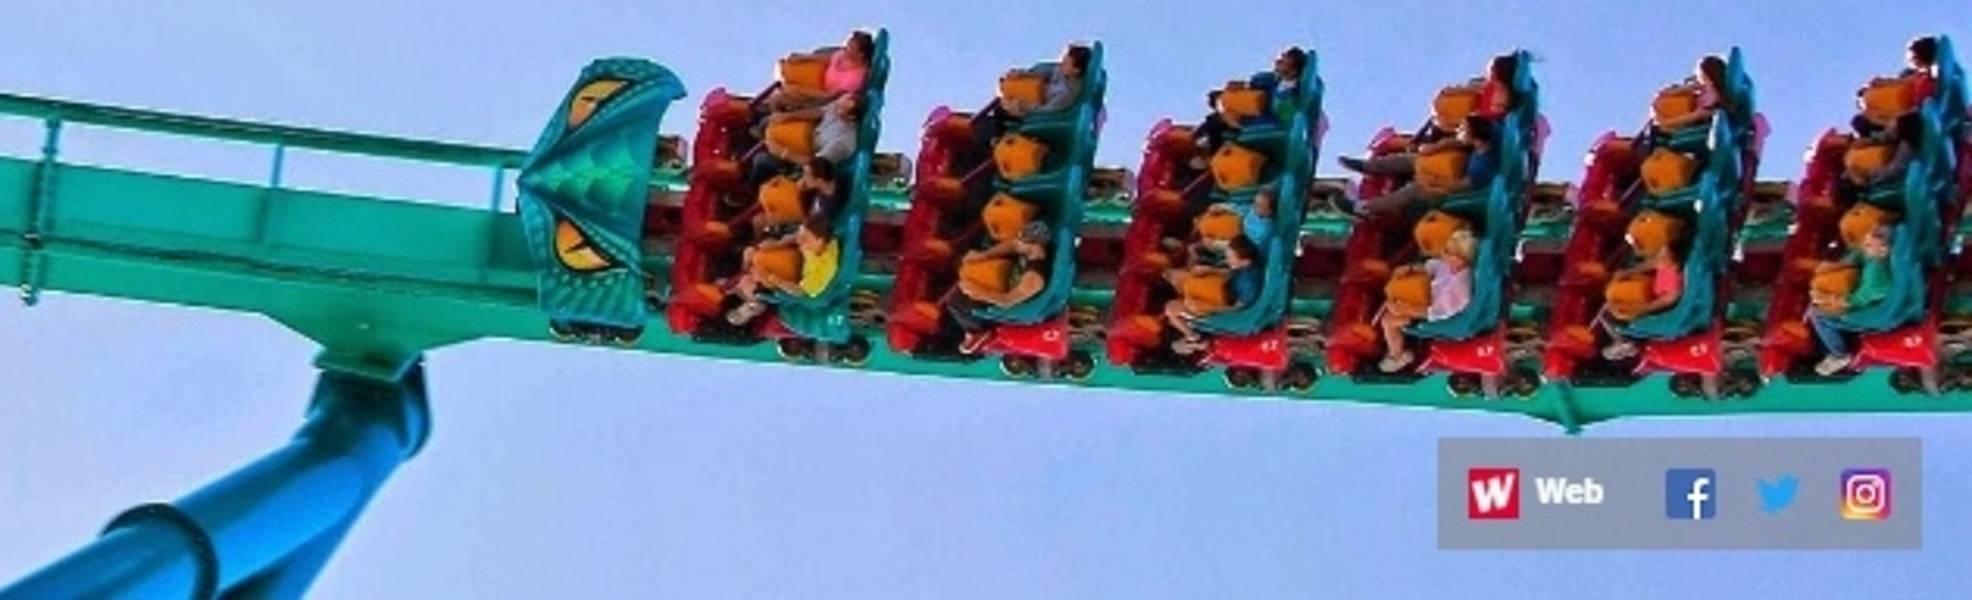 Virtual Roller Coasters16442